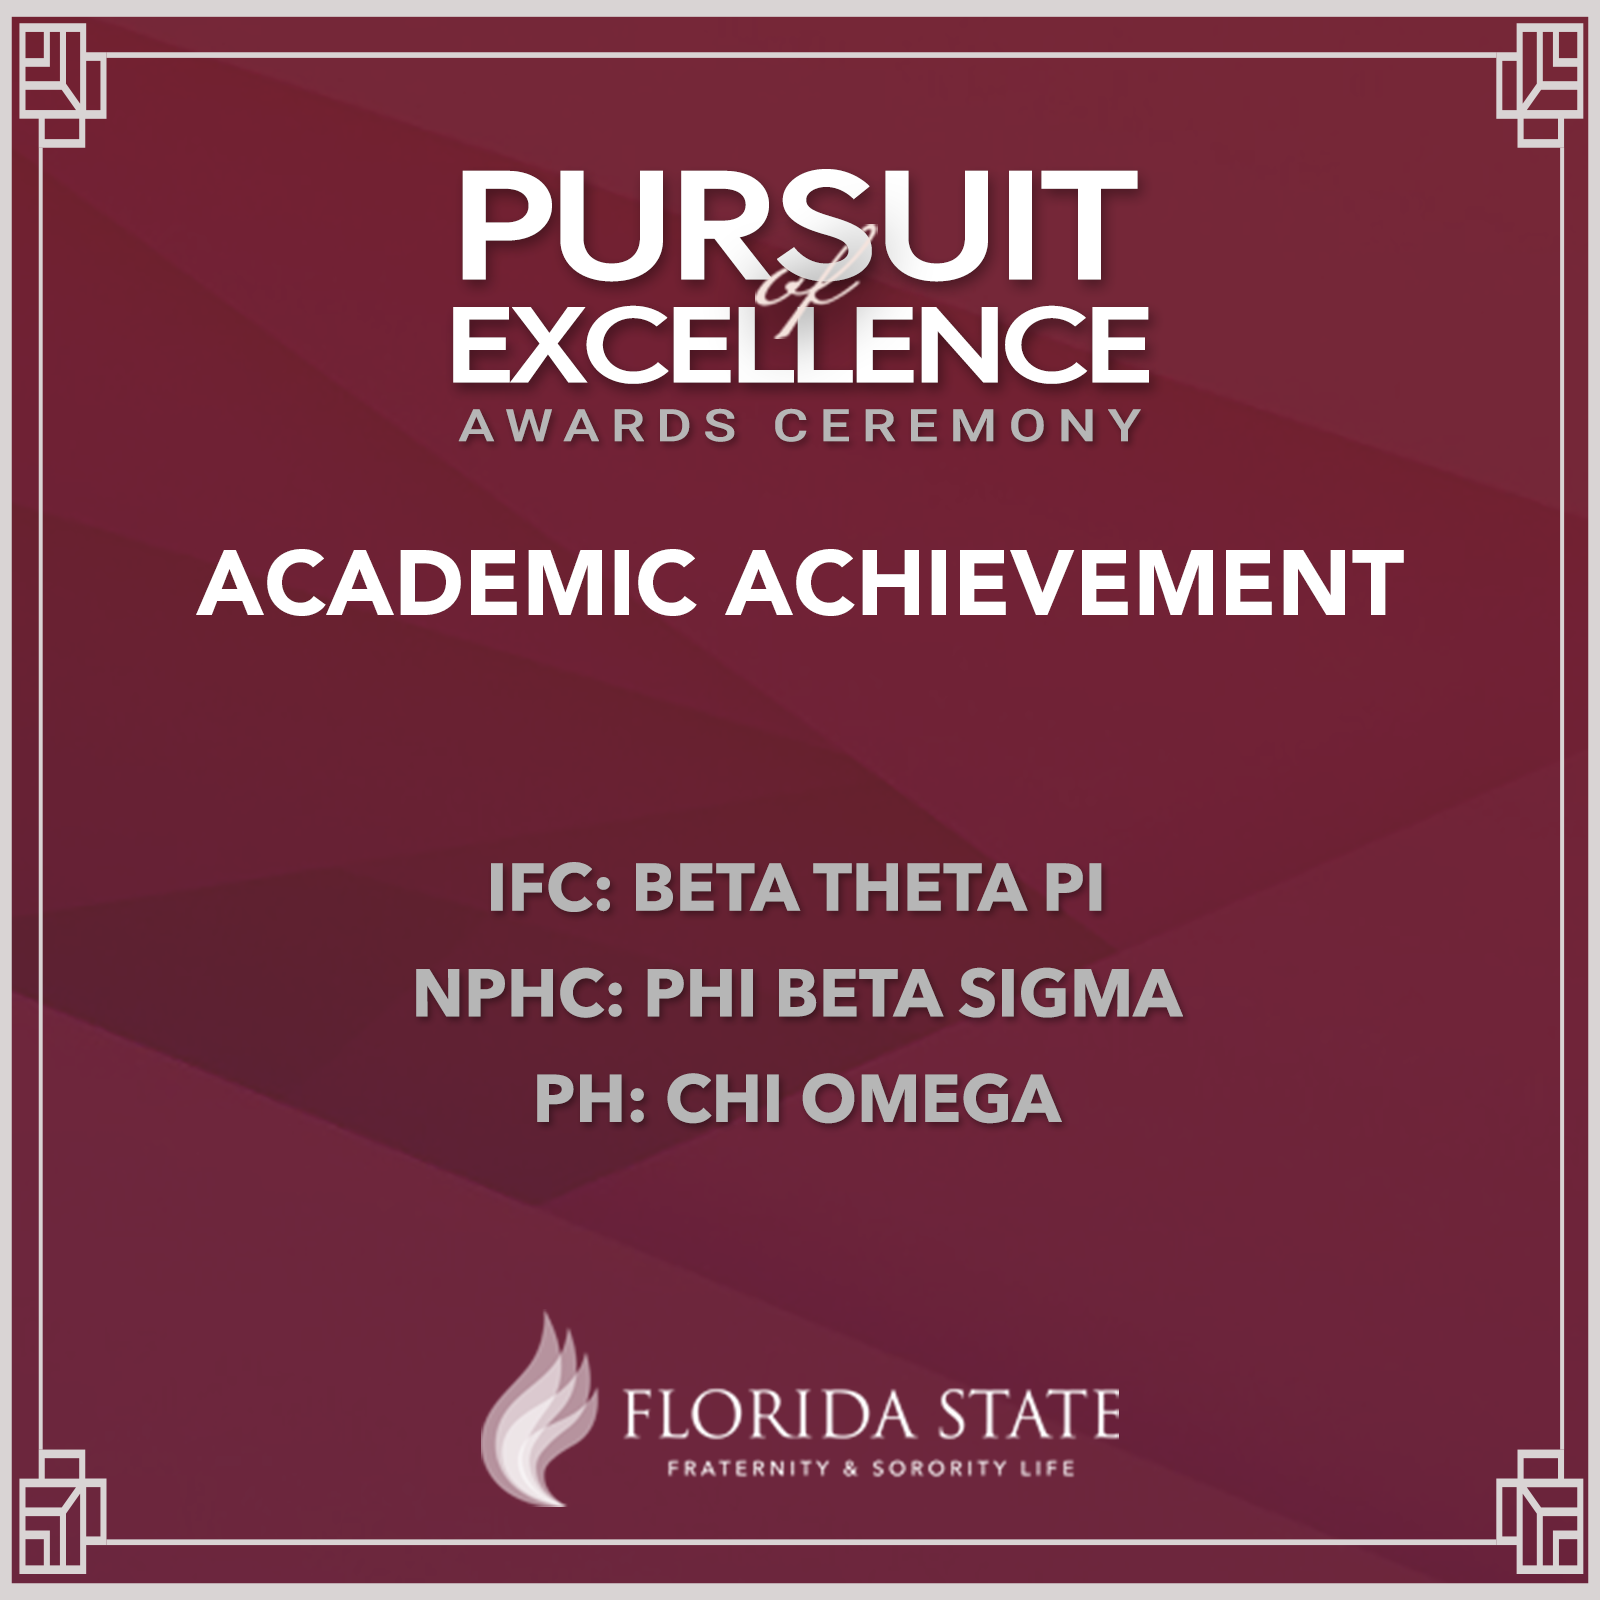 Academic Achievement winners - Beta Theta Pi, Phi Beta Sigma, Chi Omega